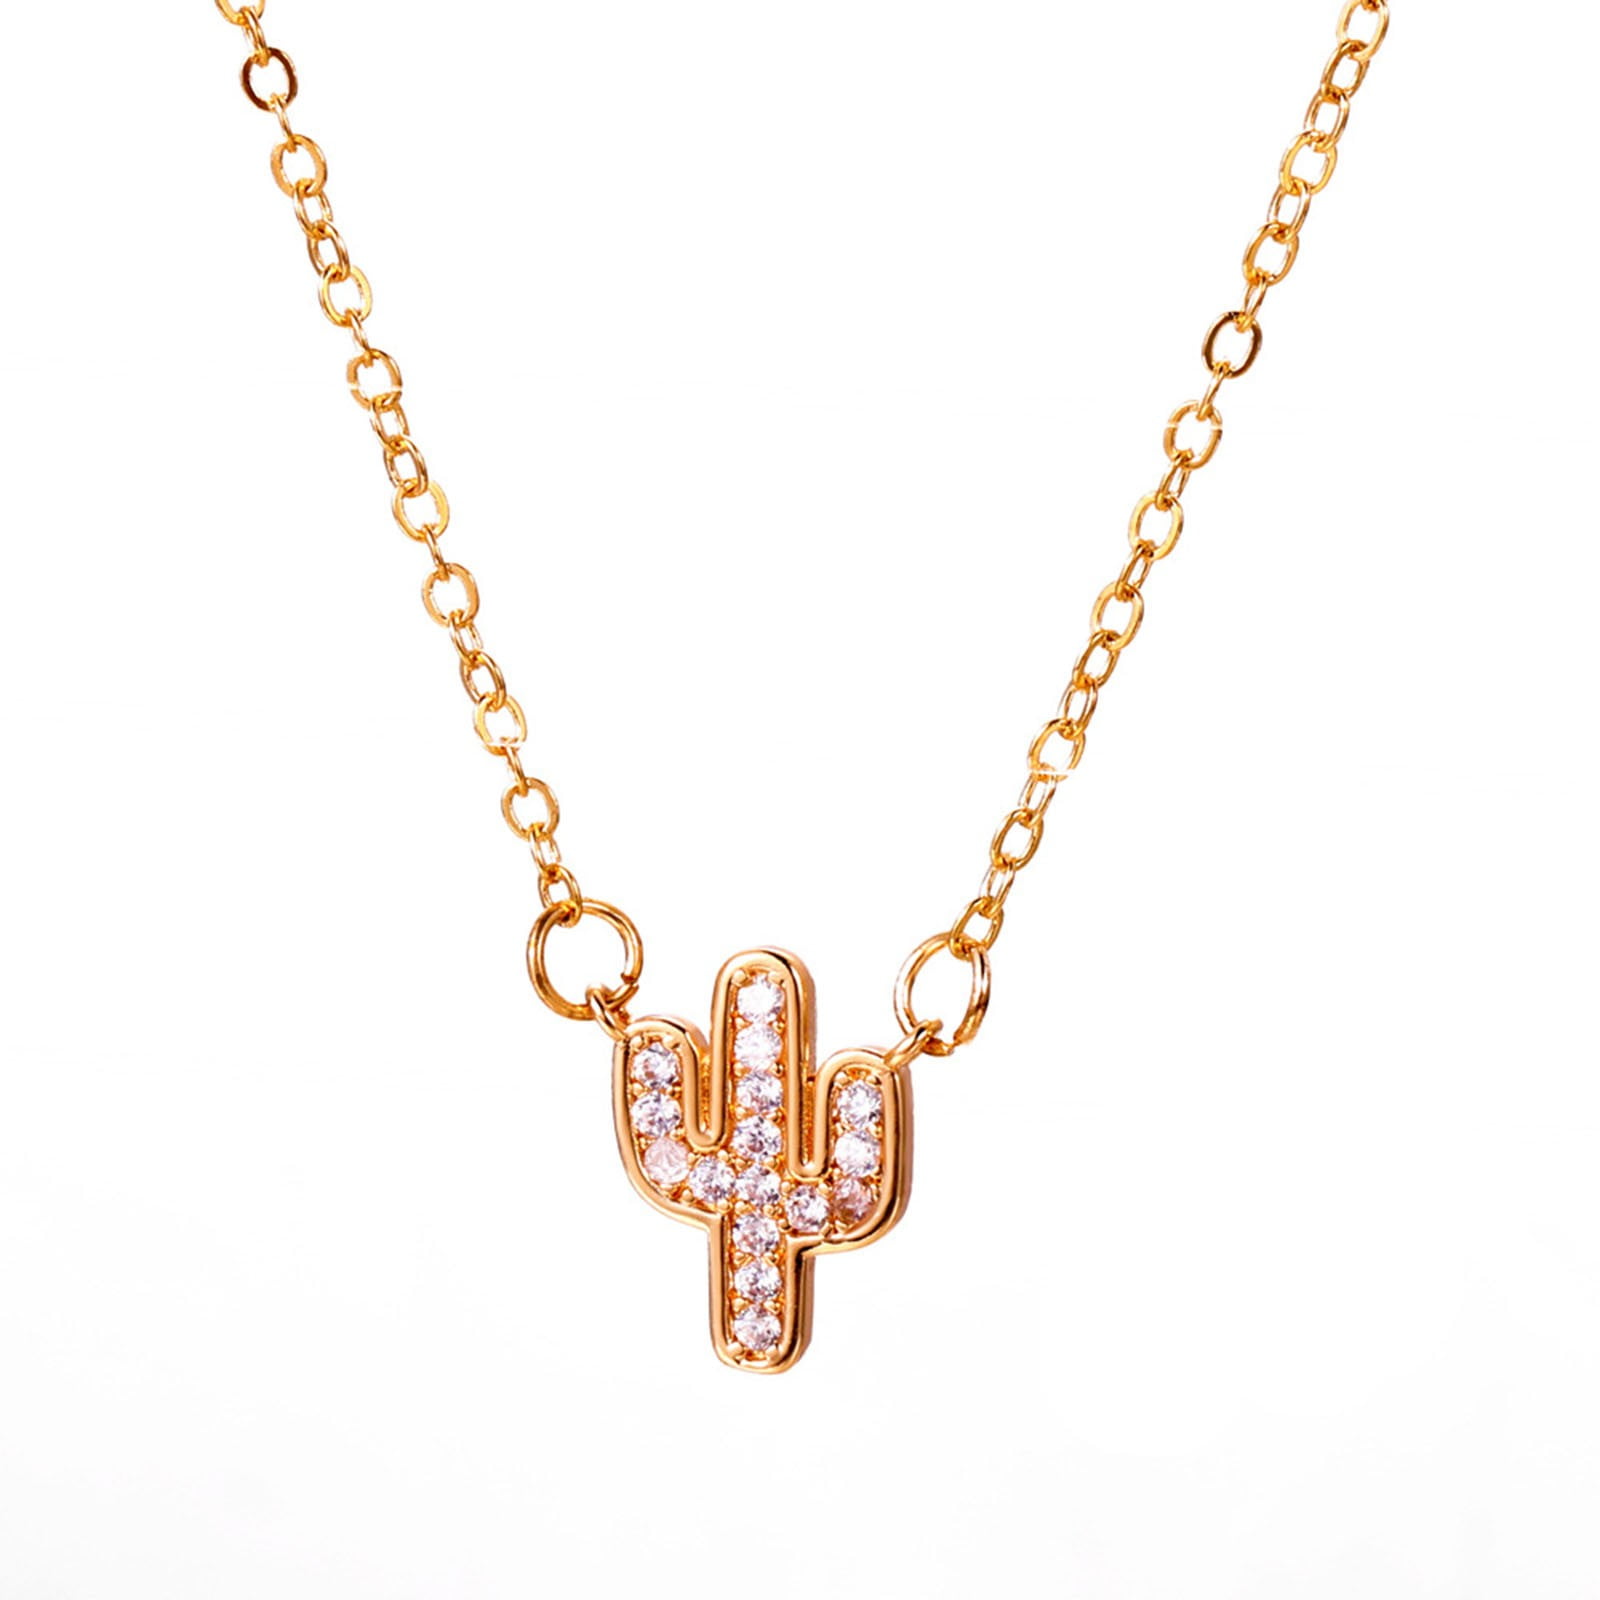 Horplkj Design Inlaid Simple Women Jewelry Necklace Ladies Pendant ...